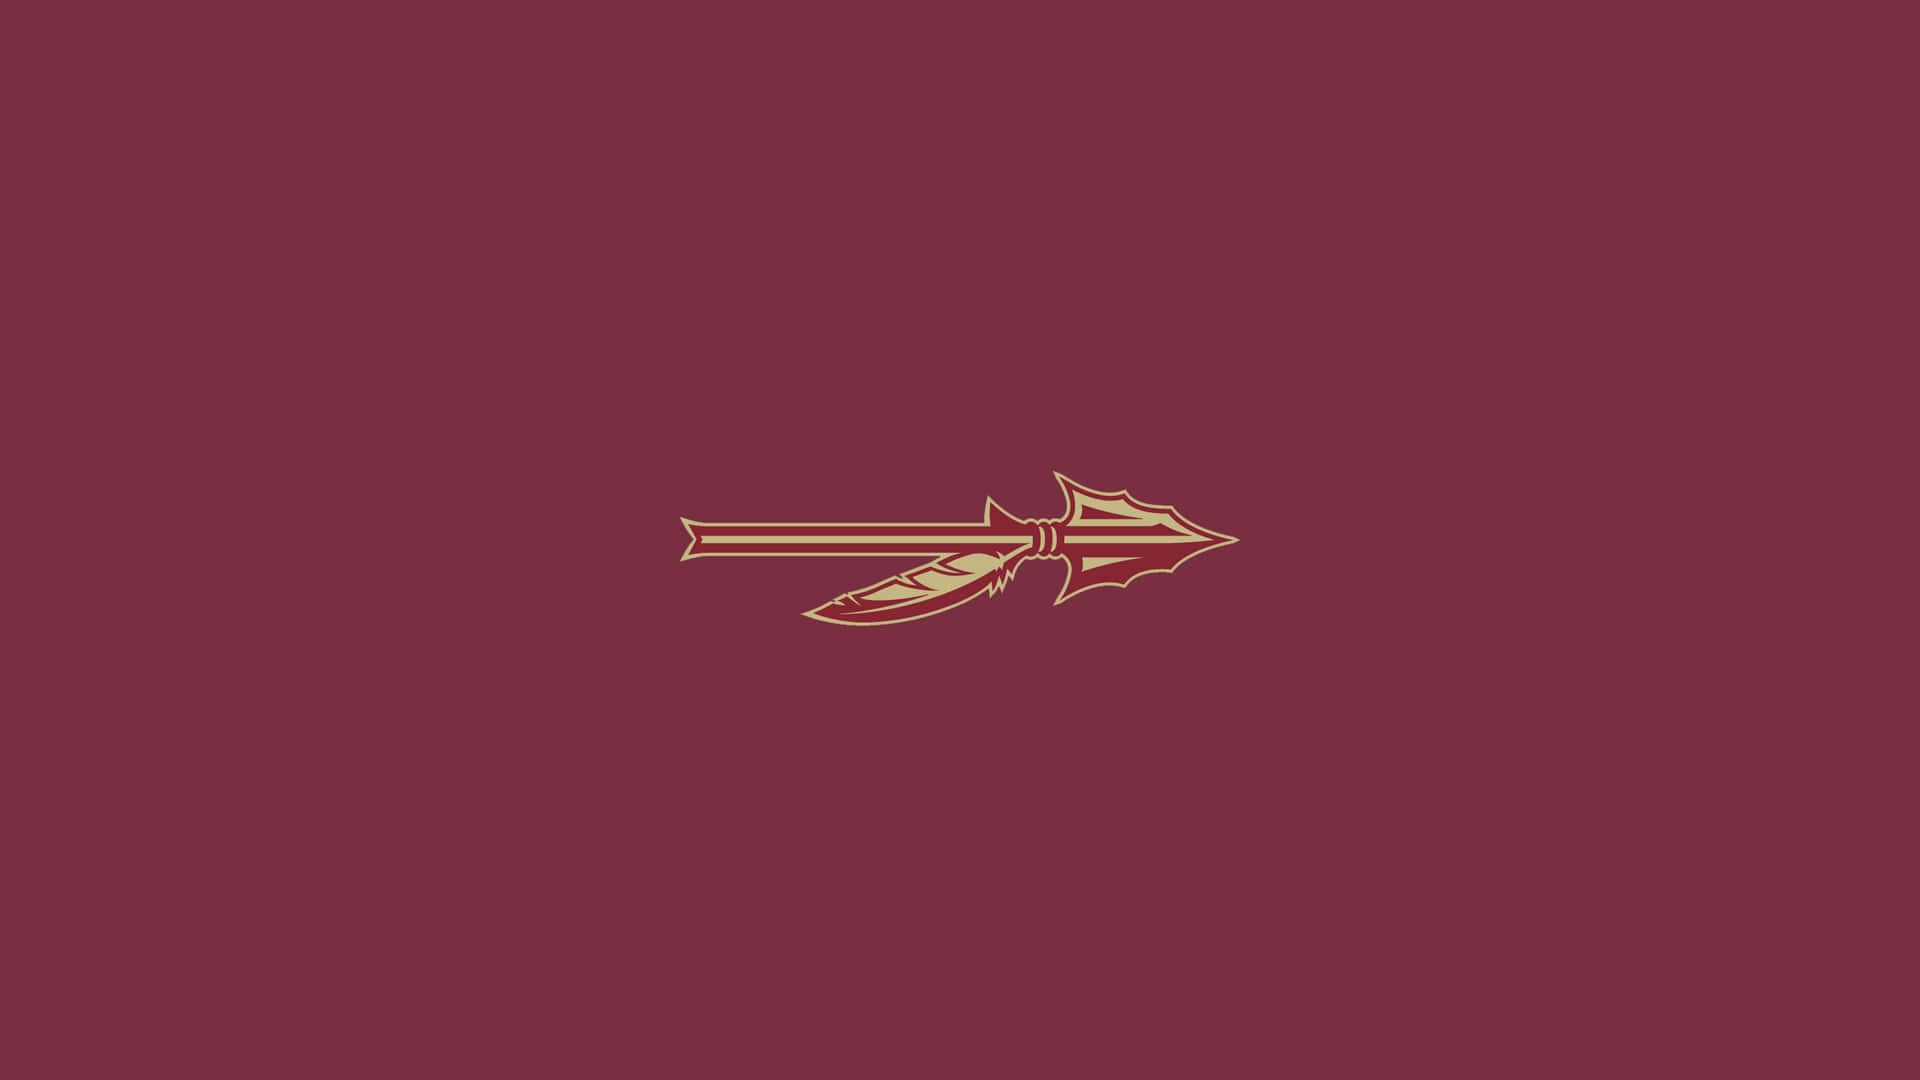 The Logo Of The St. John's Arrows Wallpaper